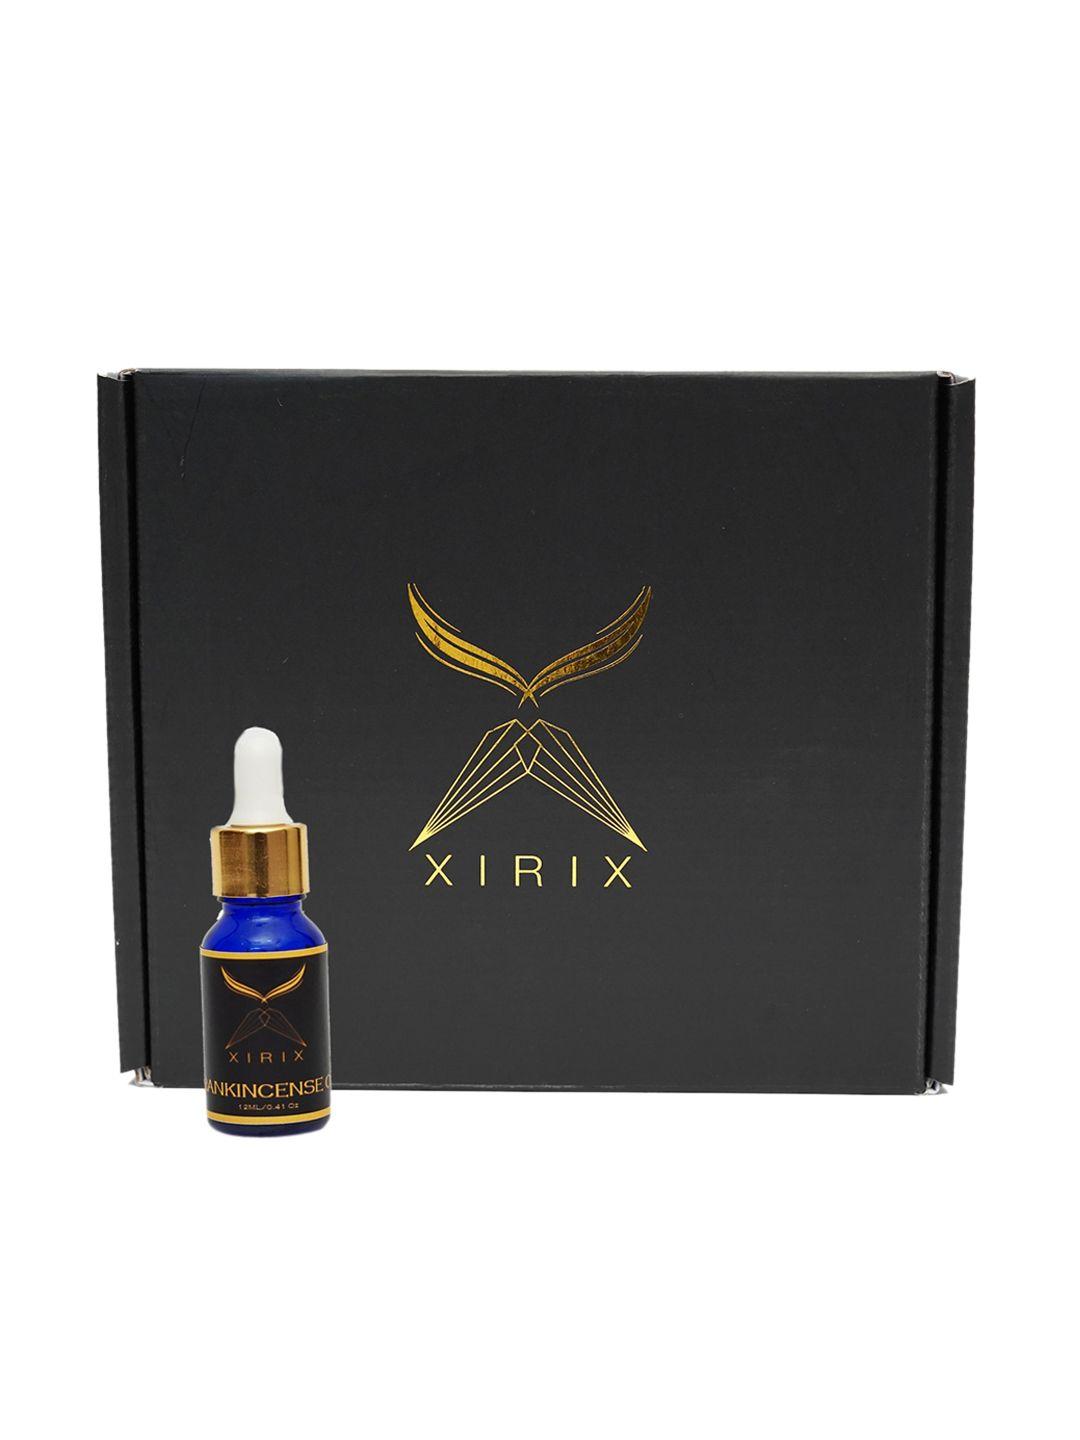 xirix frankincense essential oil - 12 ml